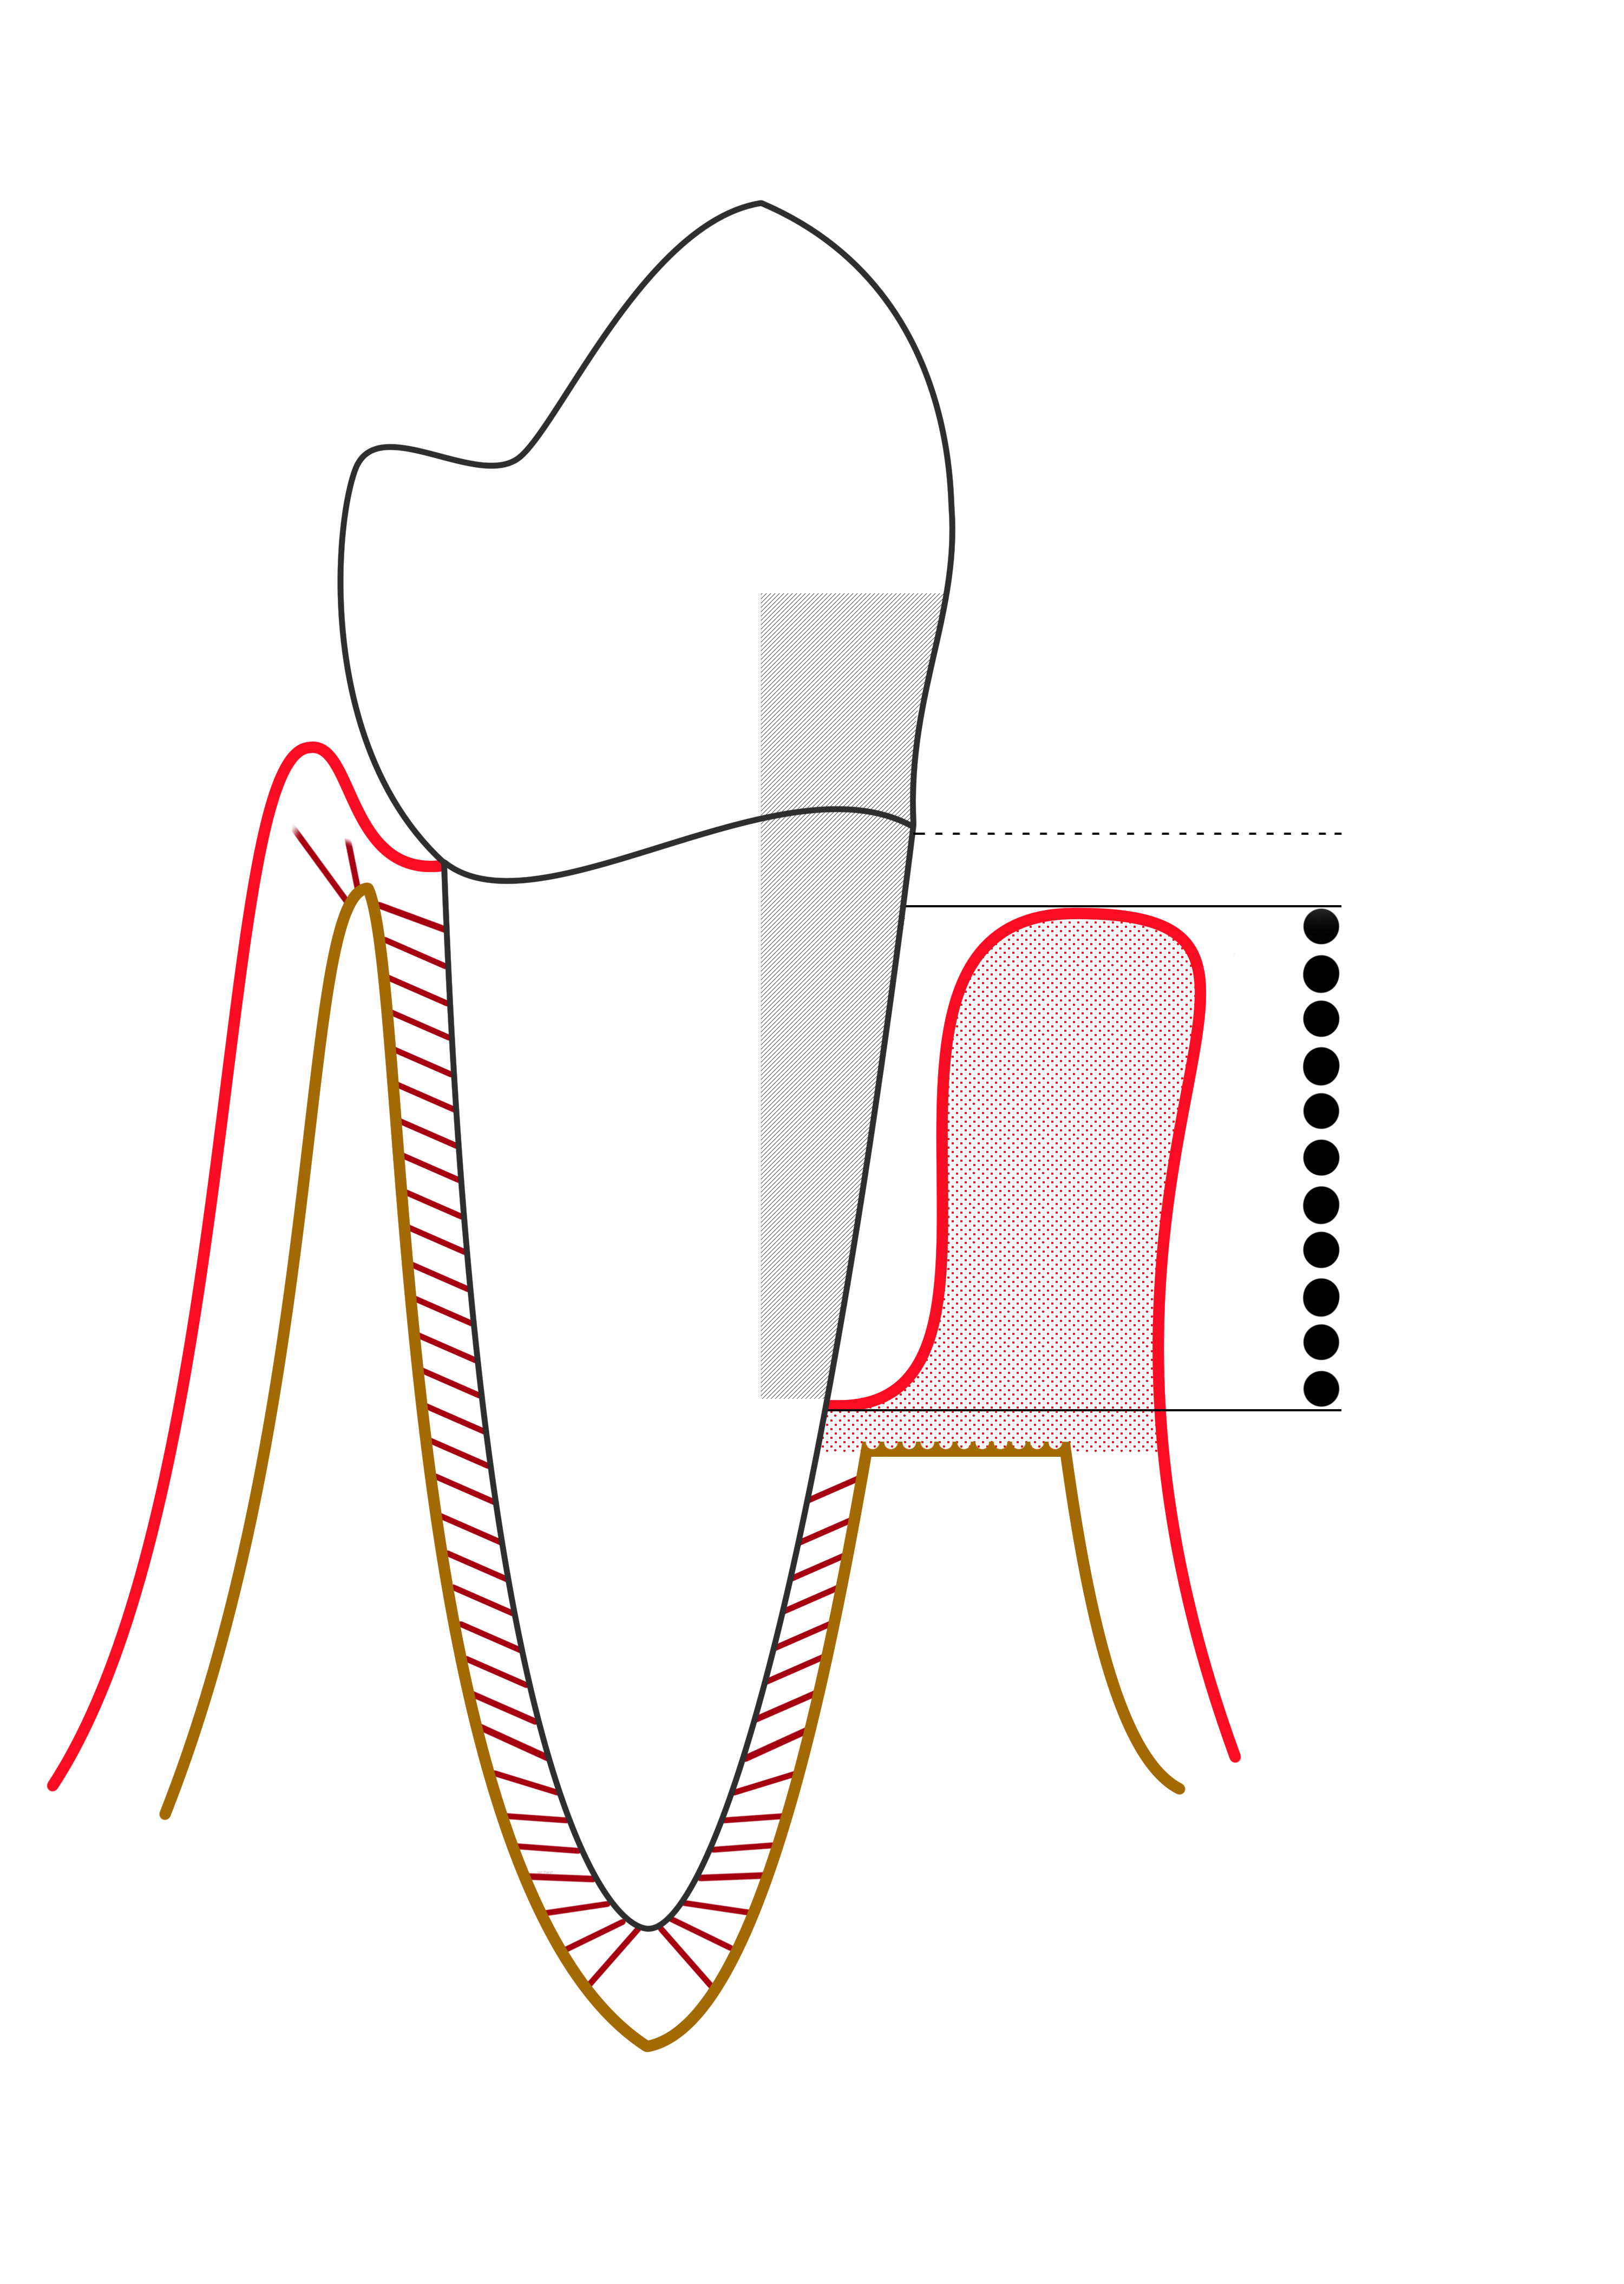 Dental Pocket Depth Chart